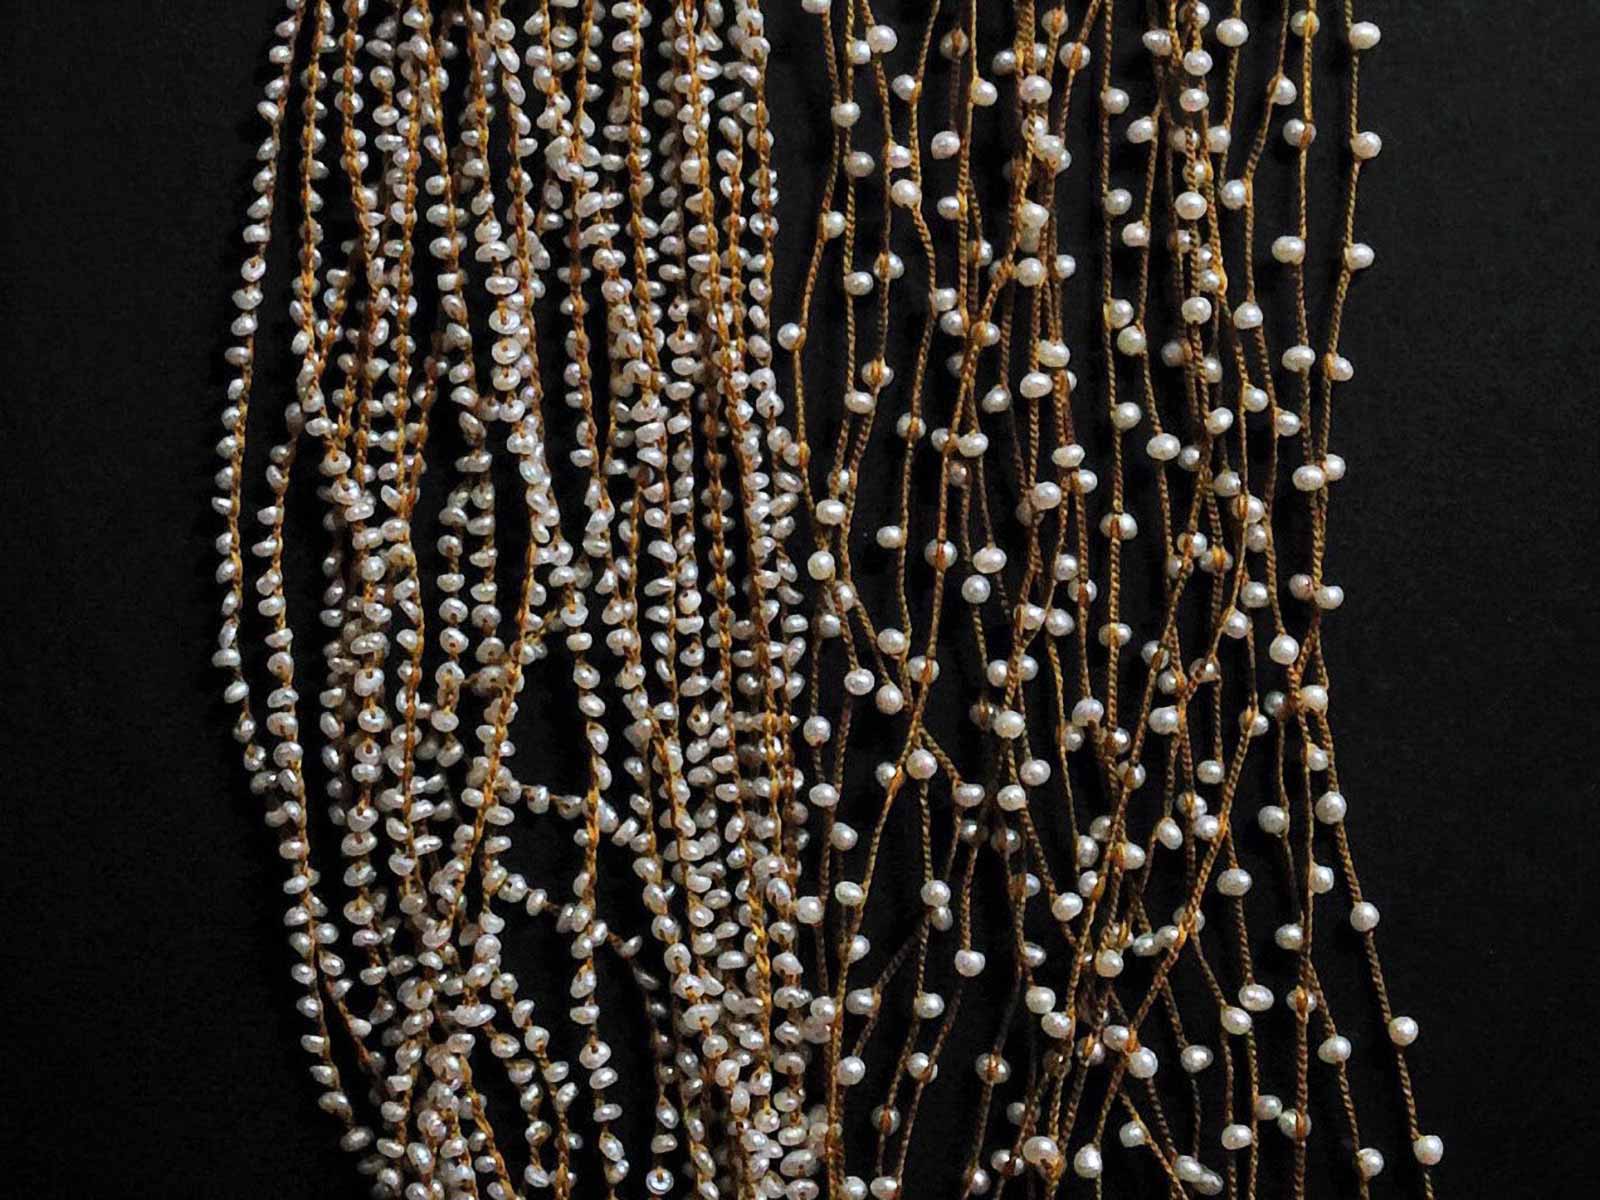 amitoアミトの絹糸のネックレス